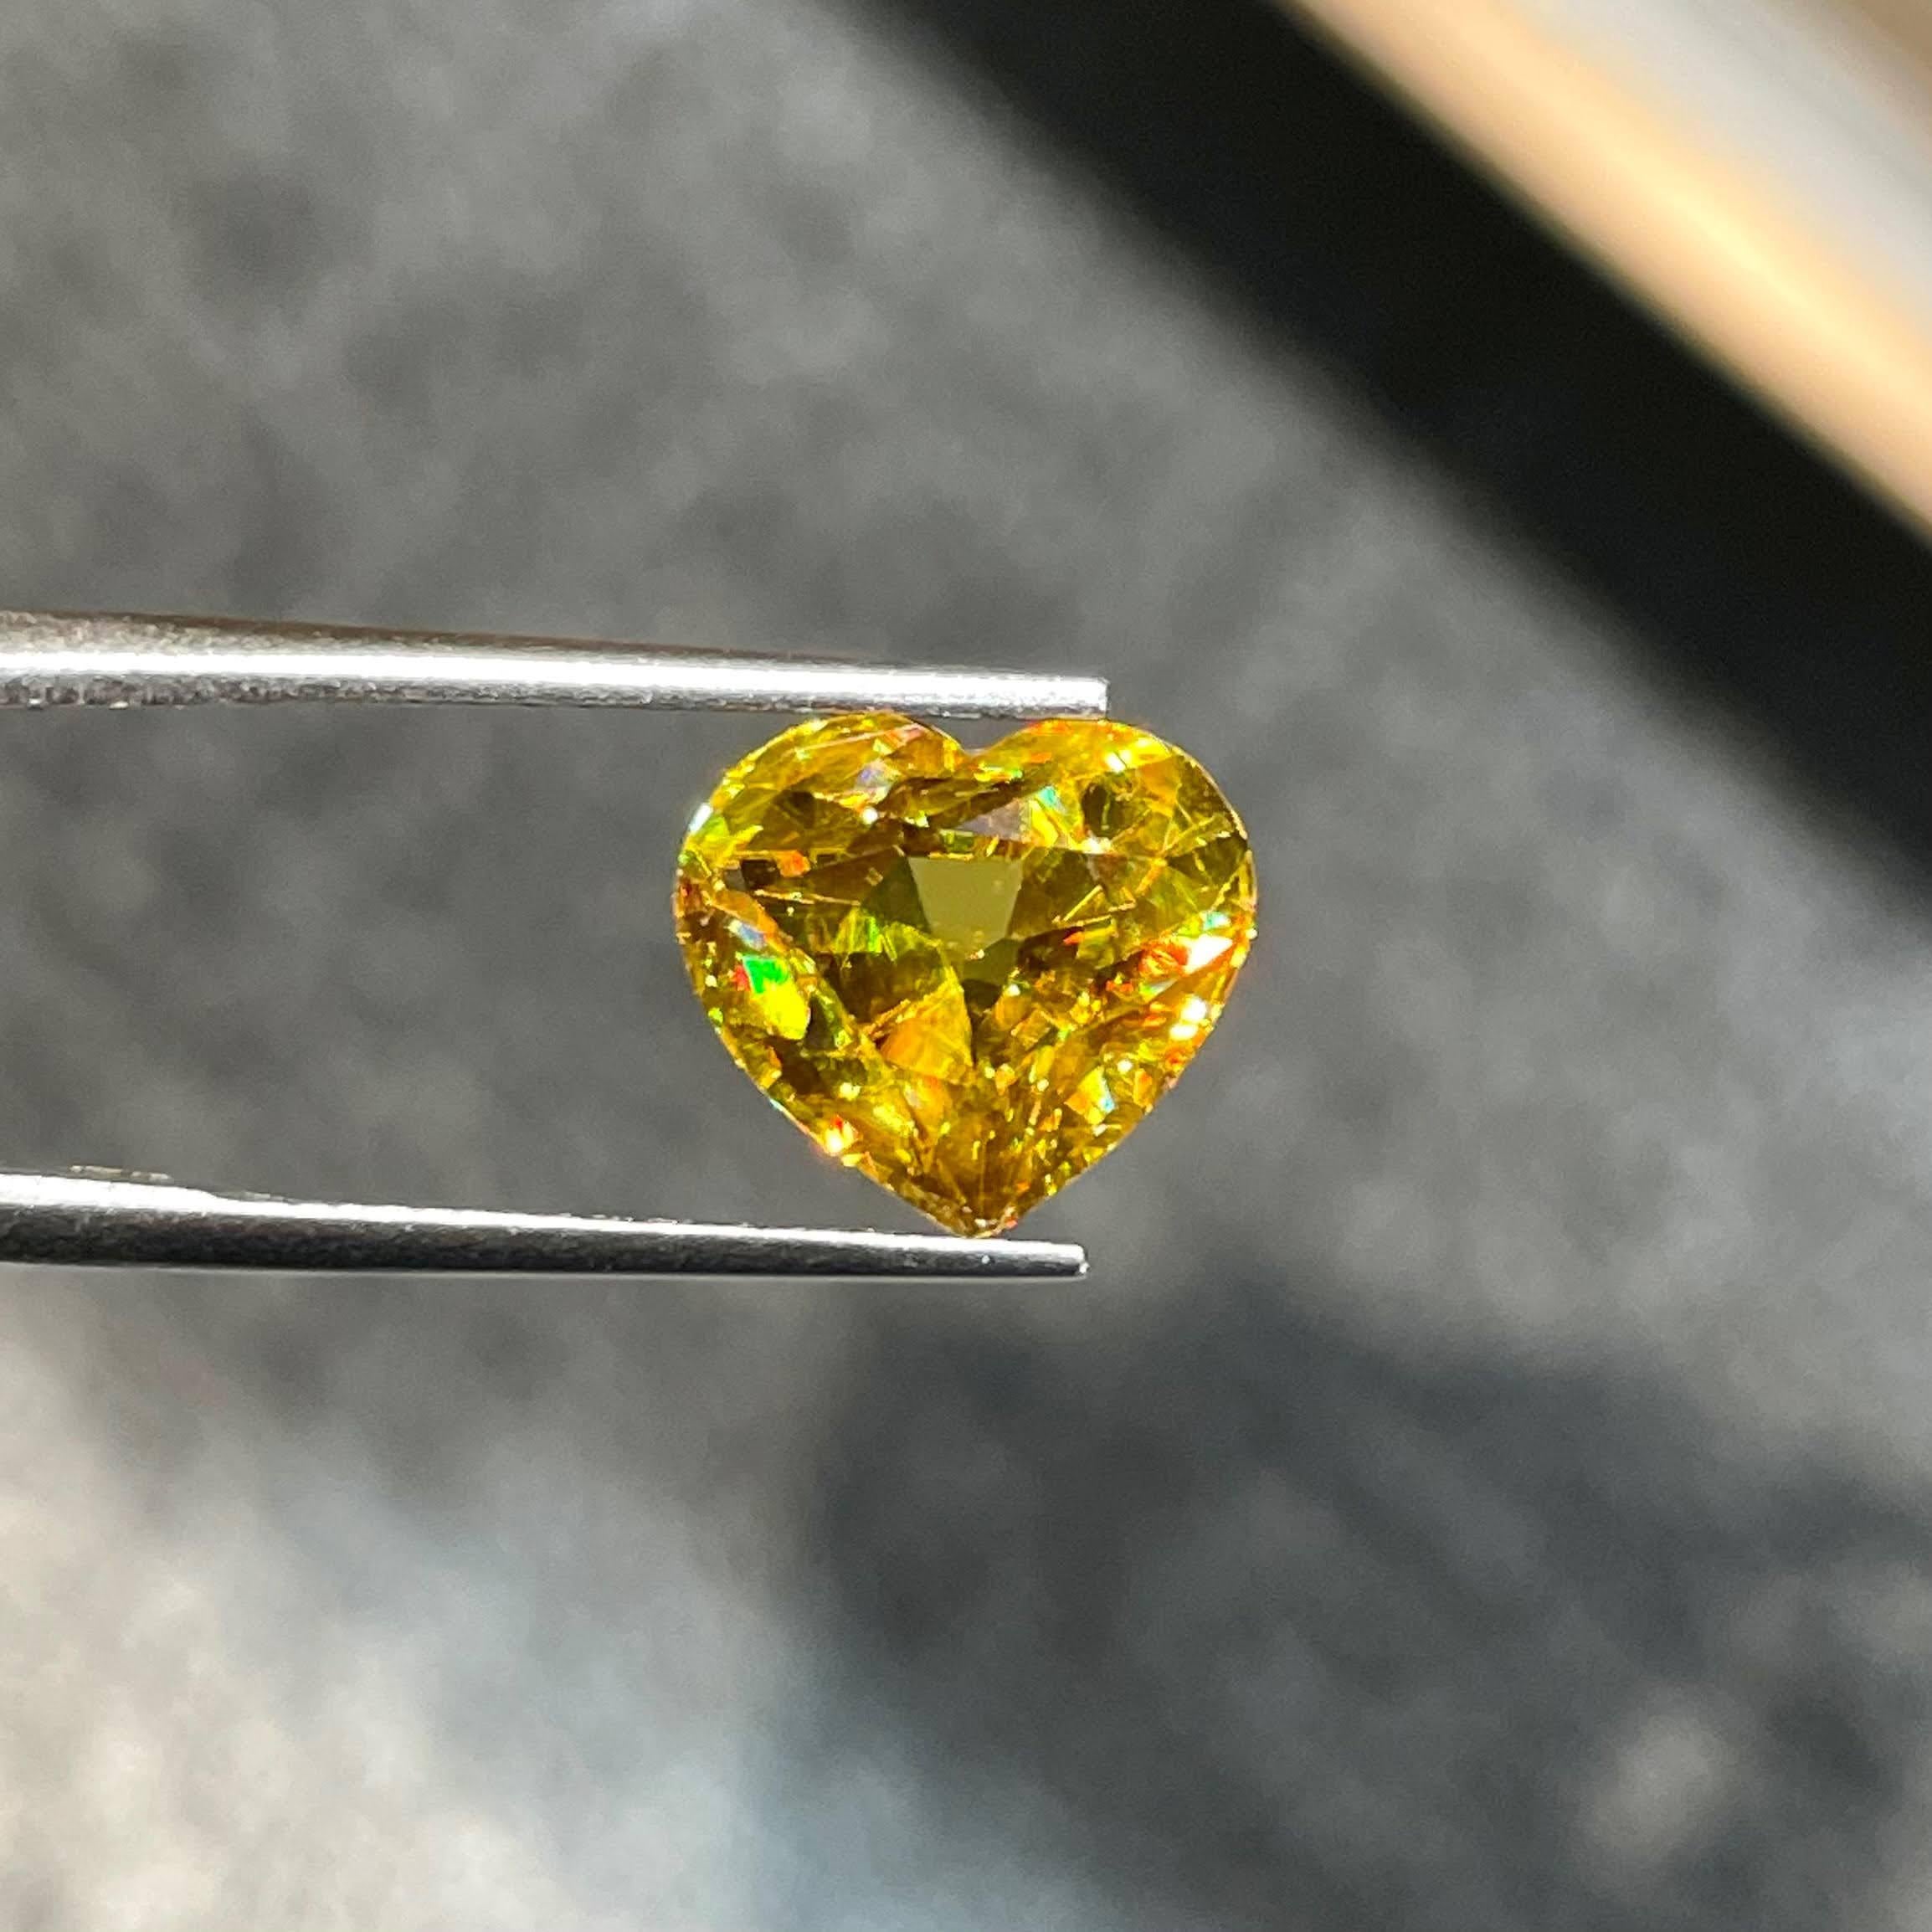 Heart Cut Fine Quality Loose Sphene Stone Heart Shaped 6.25 carats Madagascar's Gemstone